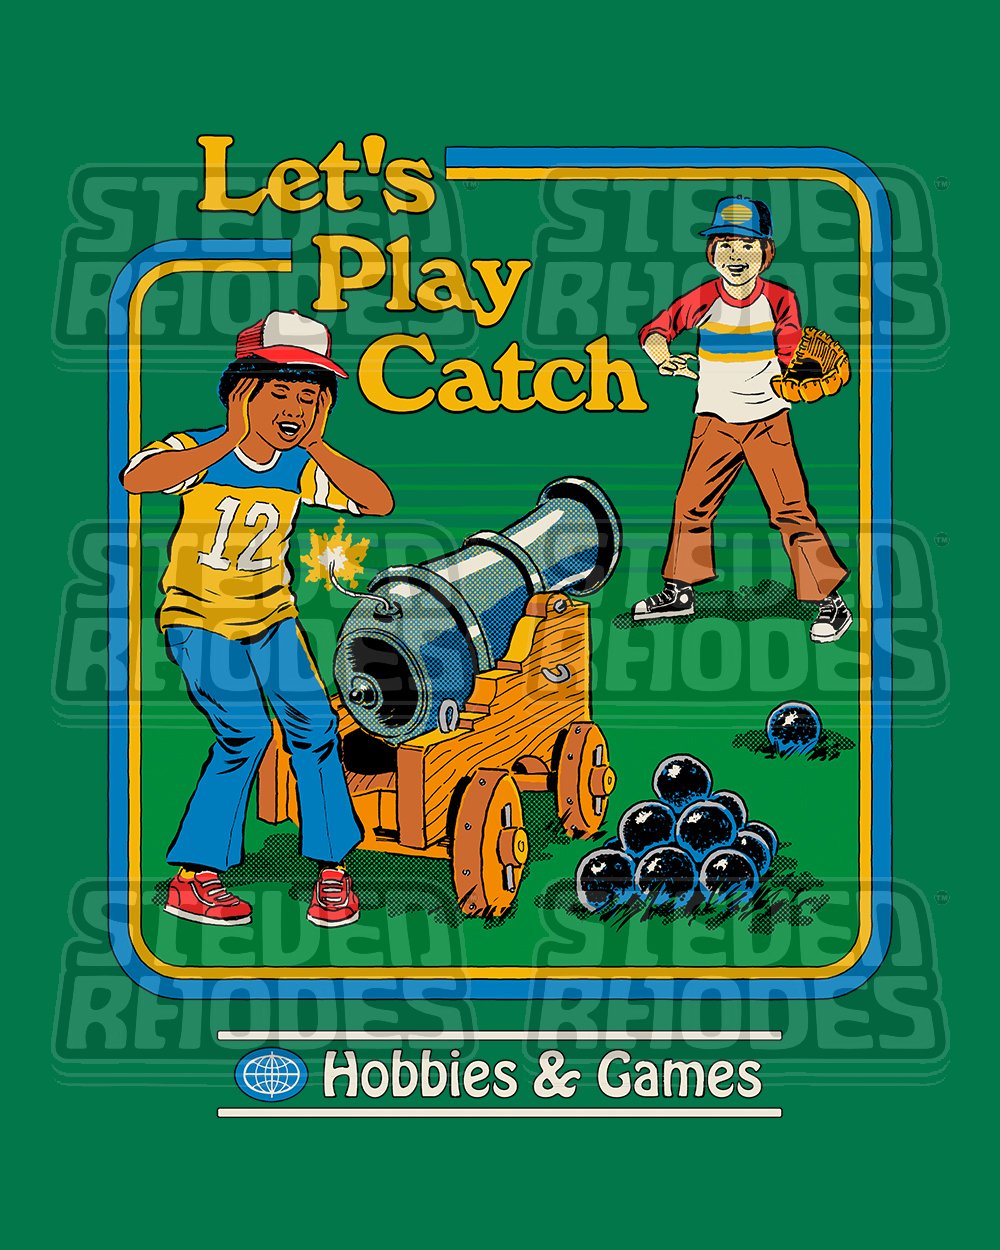 Let's Play Catch T-Shirt Australia Online #colour_green